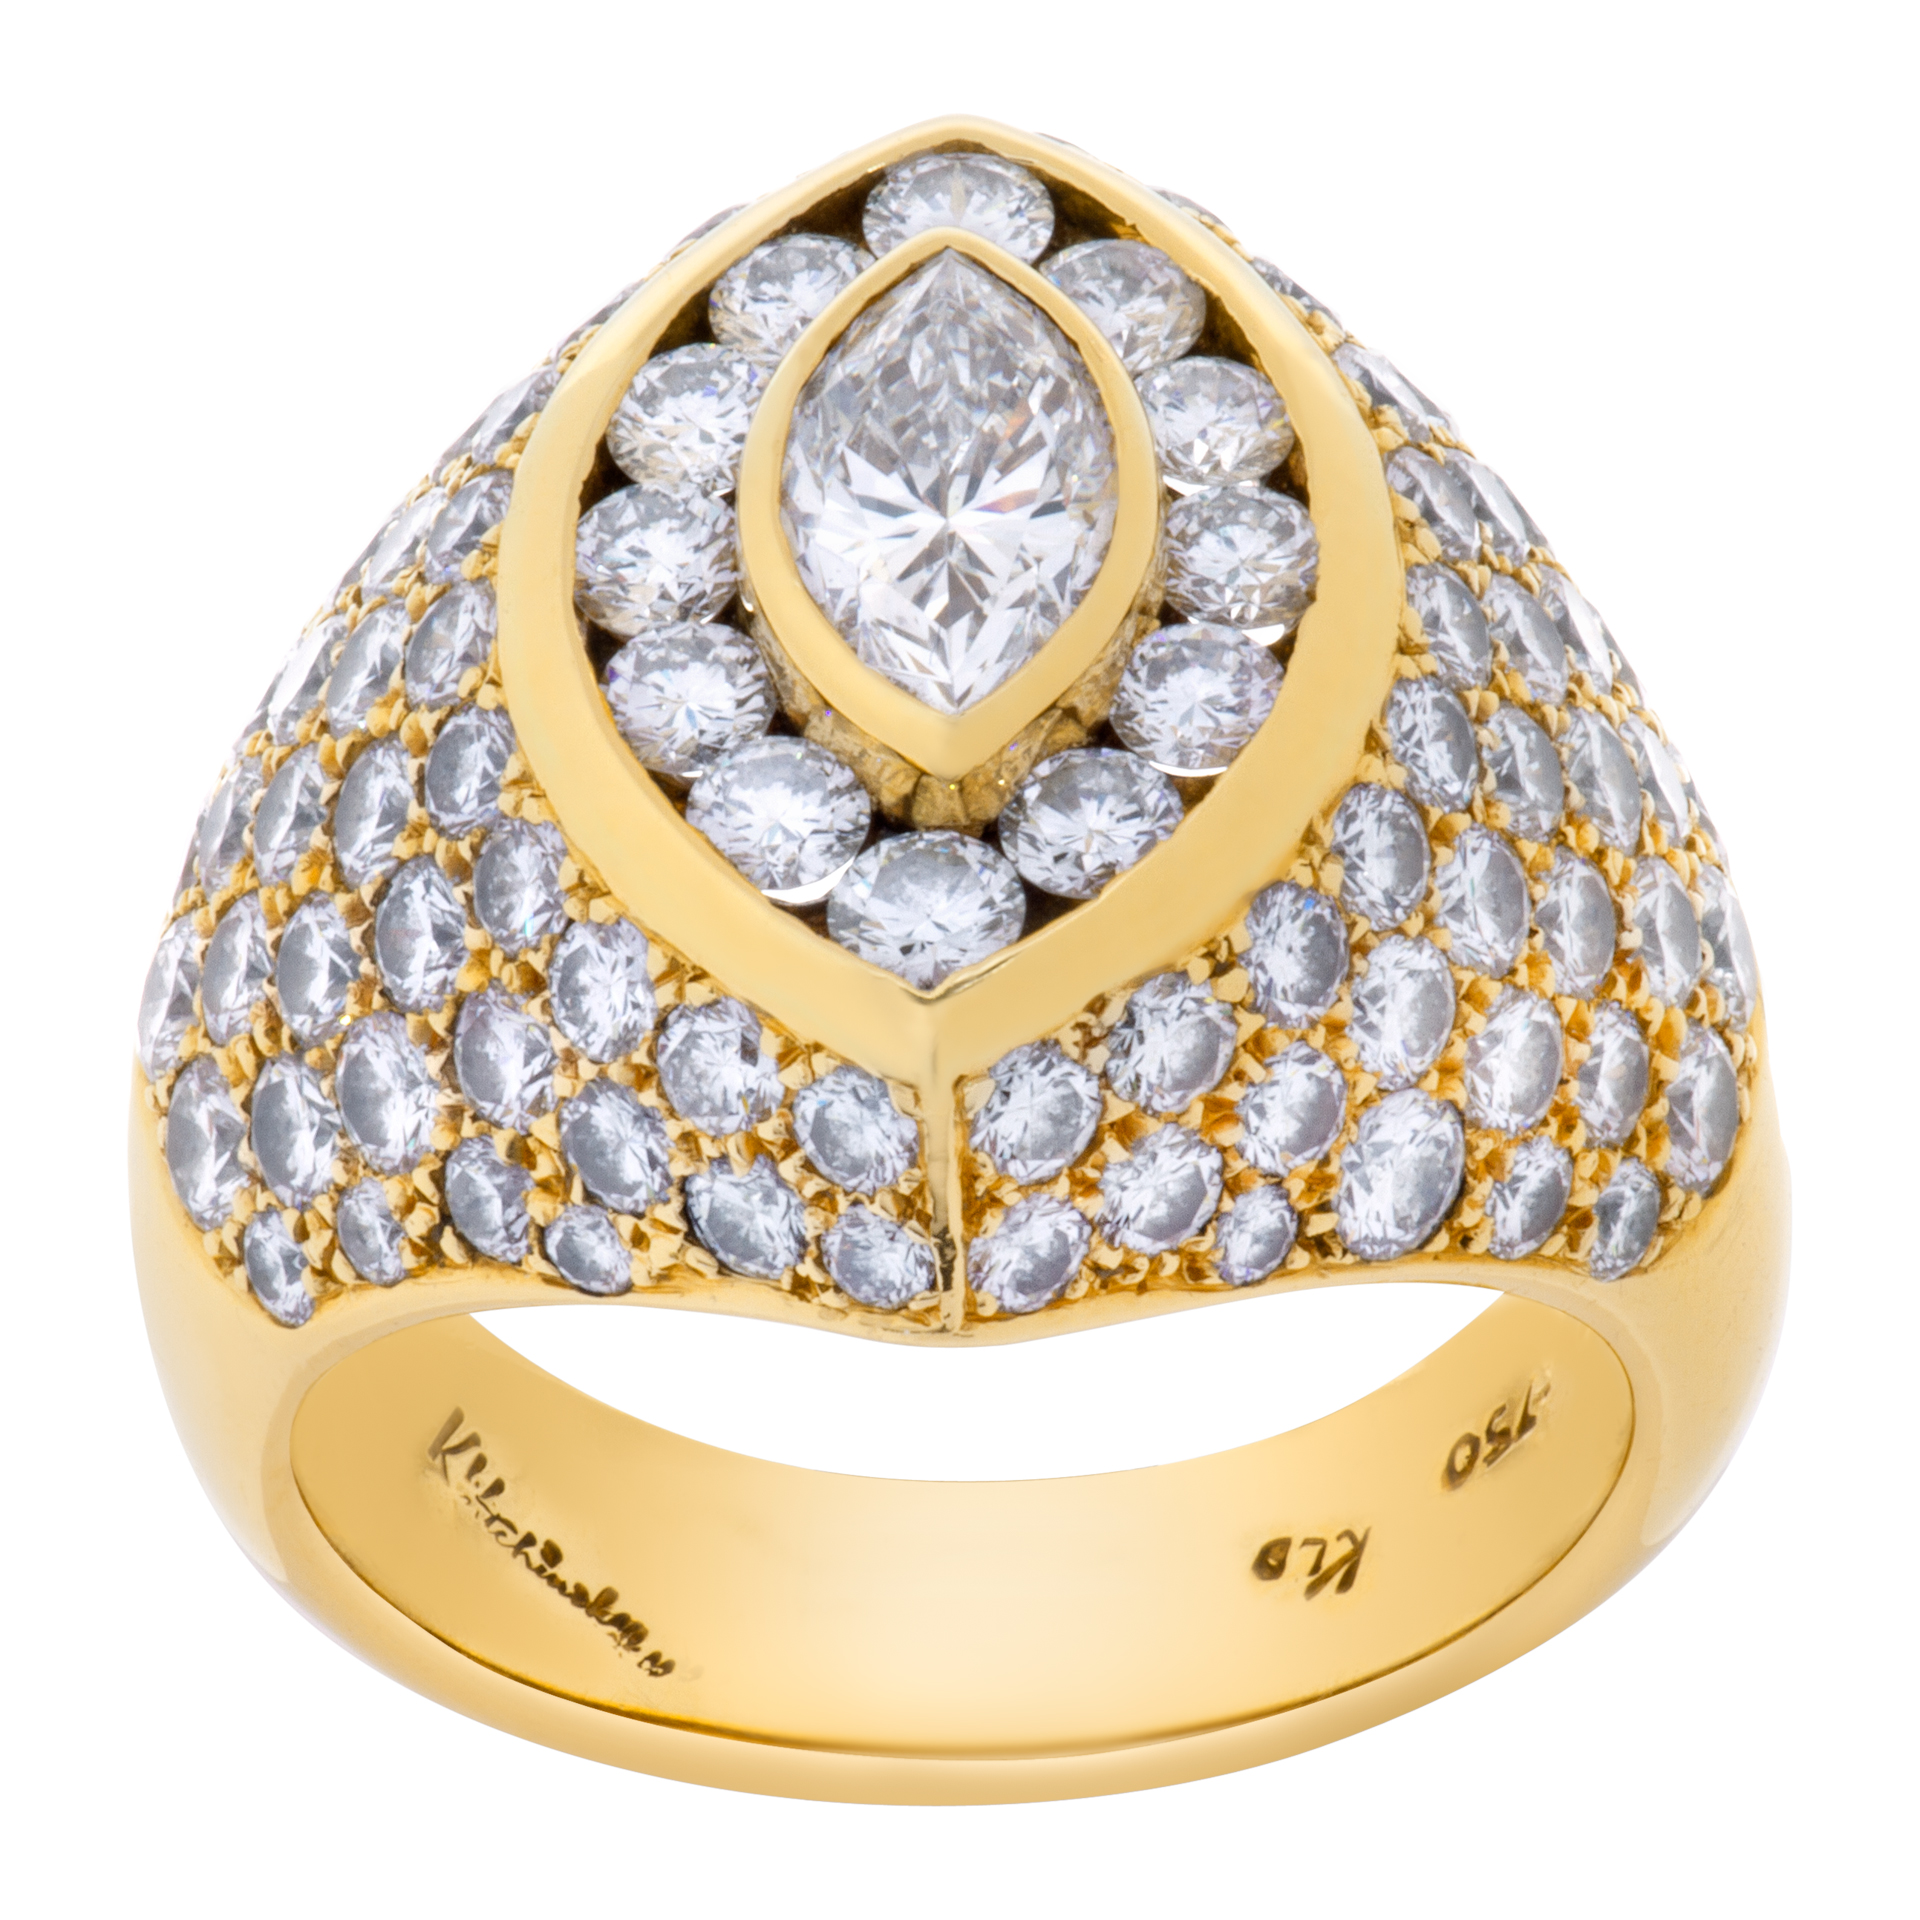 Kutchinsky 18K yellow gold diamond ring, total diamonds weight approx. 4.00 carats. All diamonds estimate E-F color, VVS clarity.